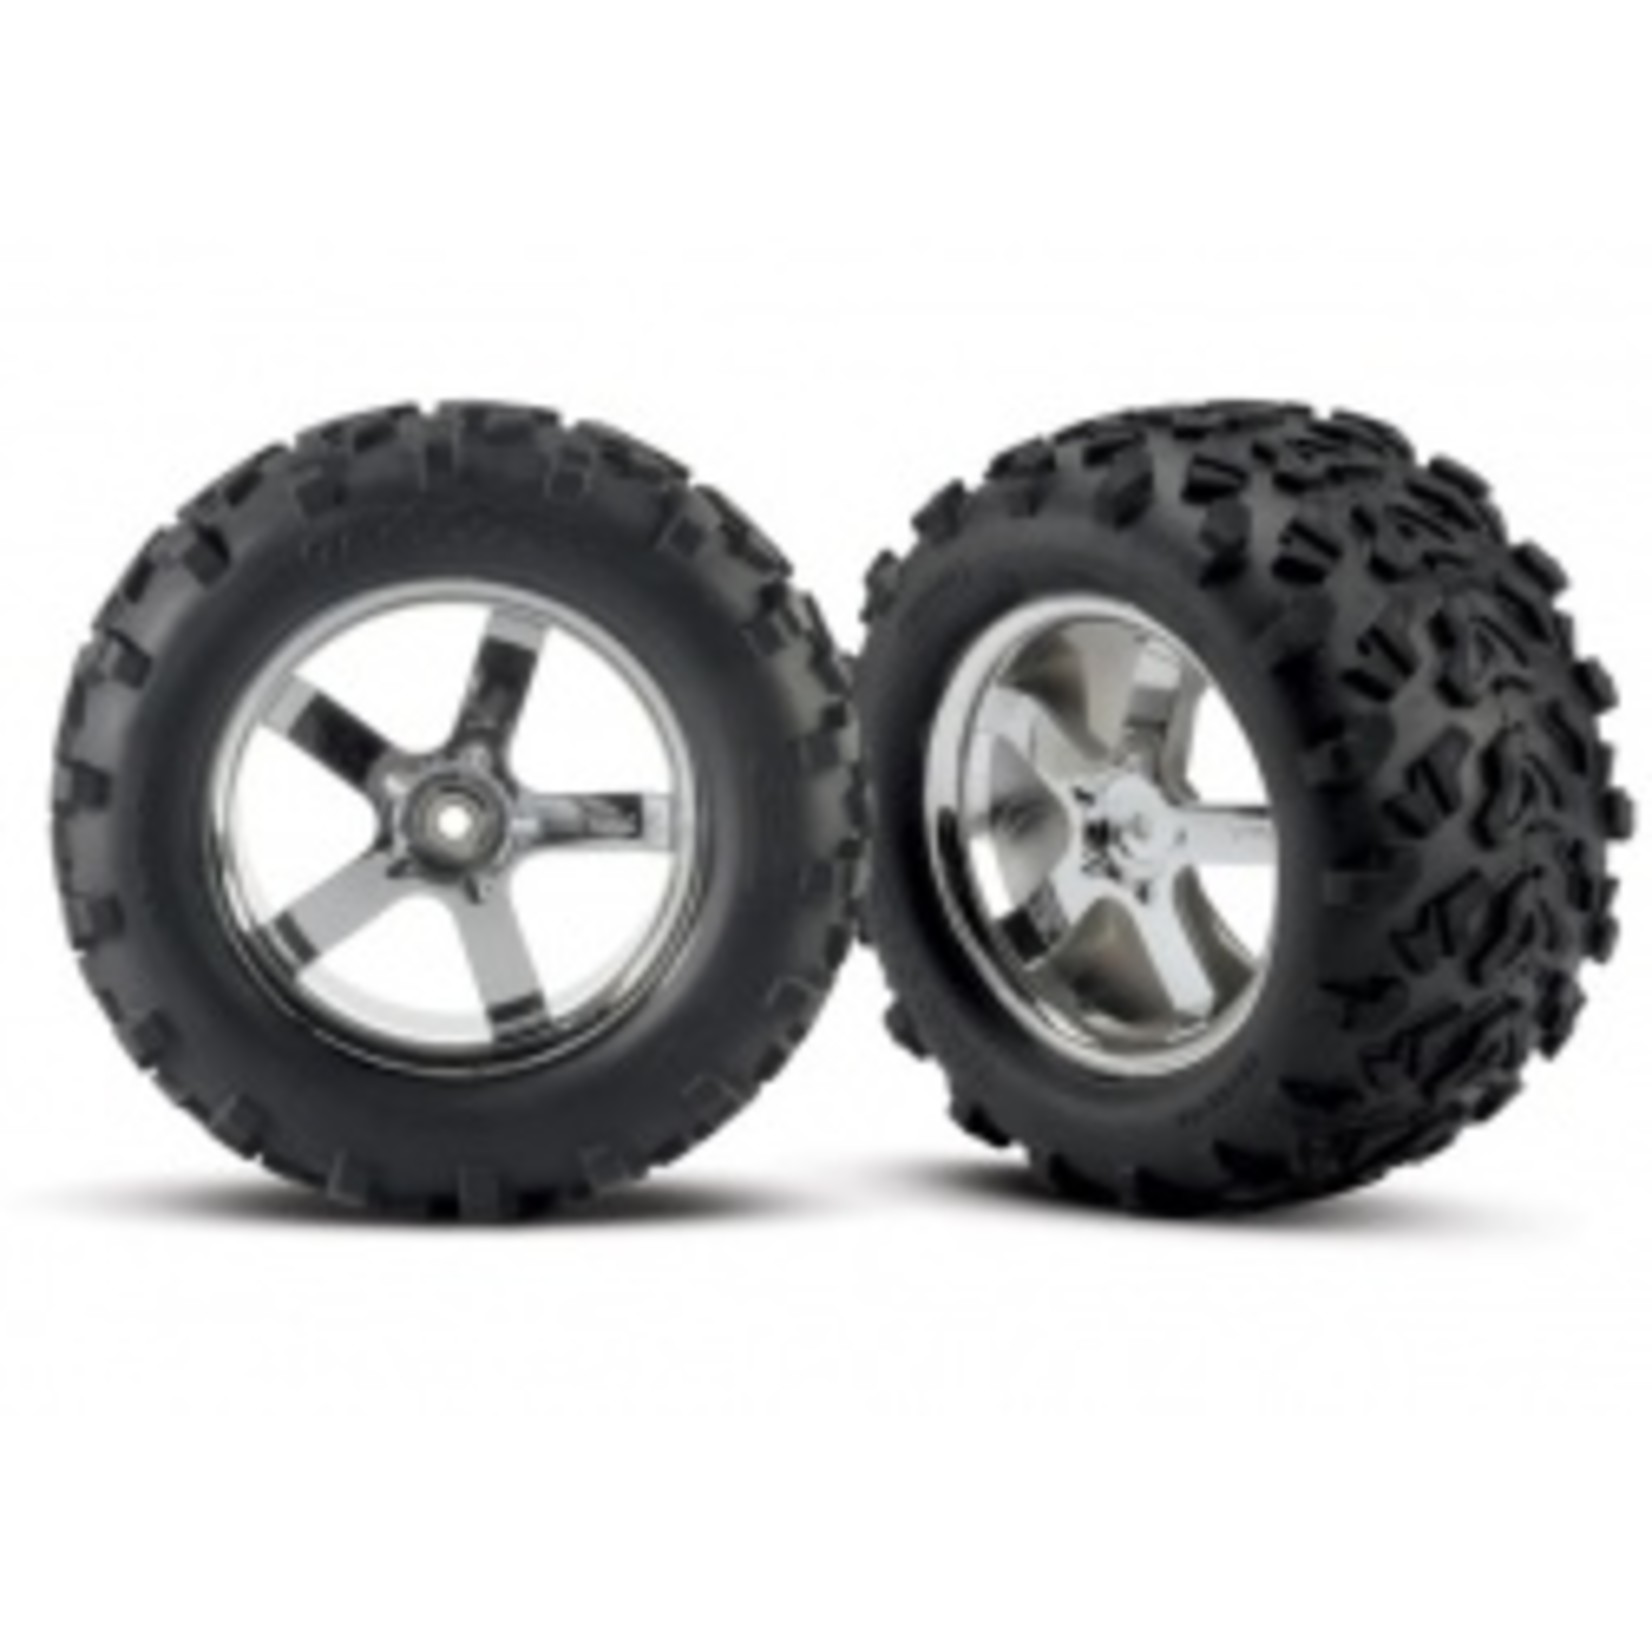 Traxxas Tires & wheels, assembled, glued (Hurricane chrome wheels, Maxx® tires (6.3" outer diameter), foam inserts) (2)